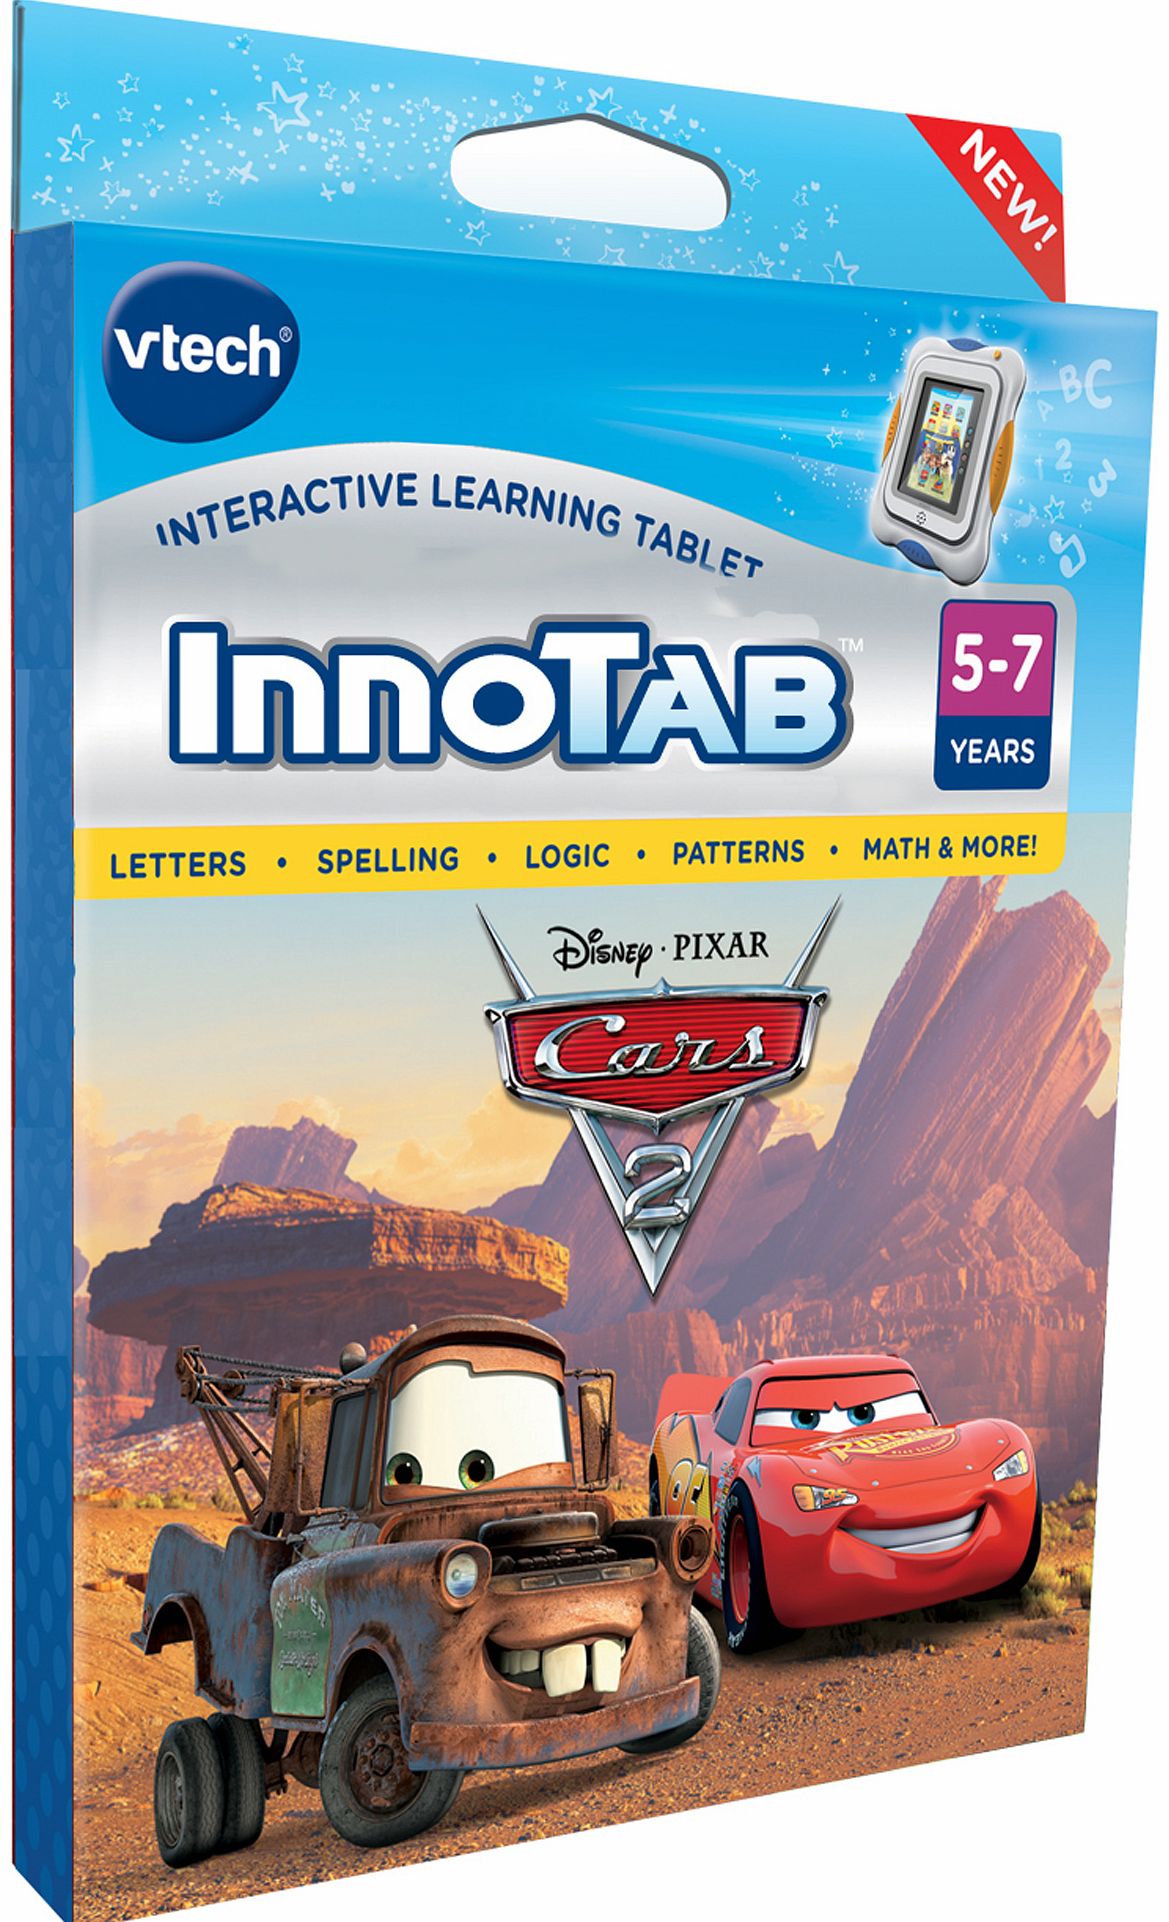 Vtech InnoTab Software - Disney Cars 2